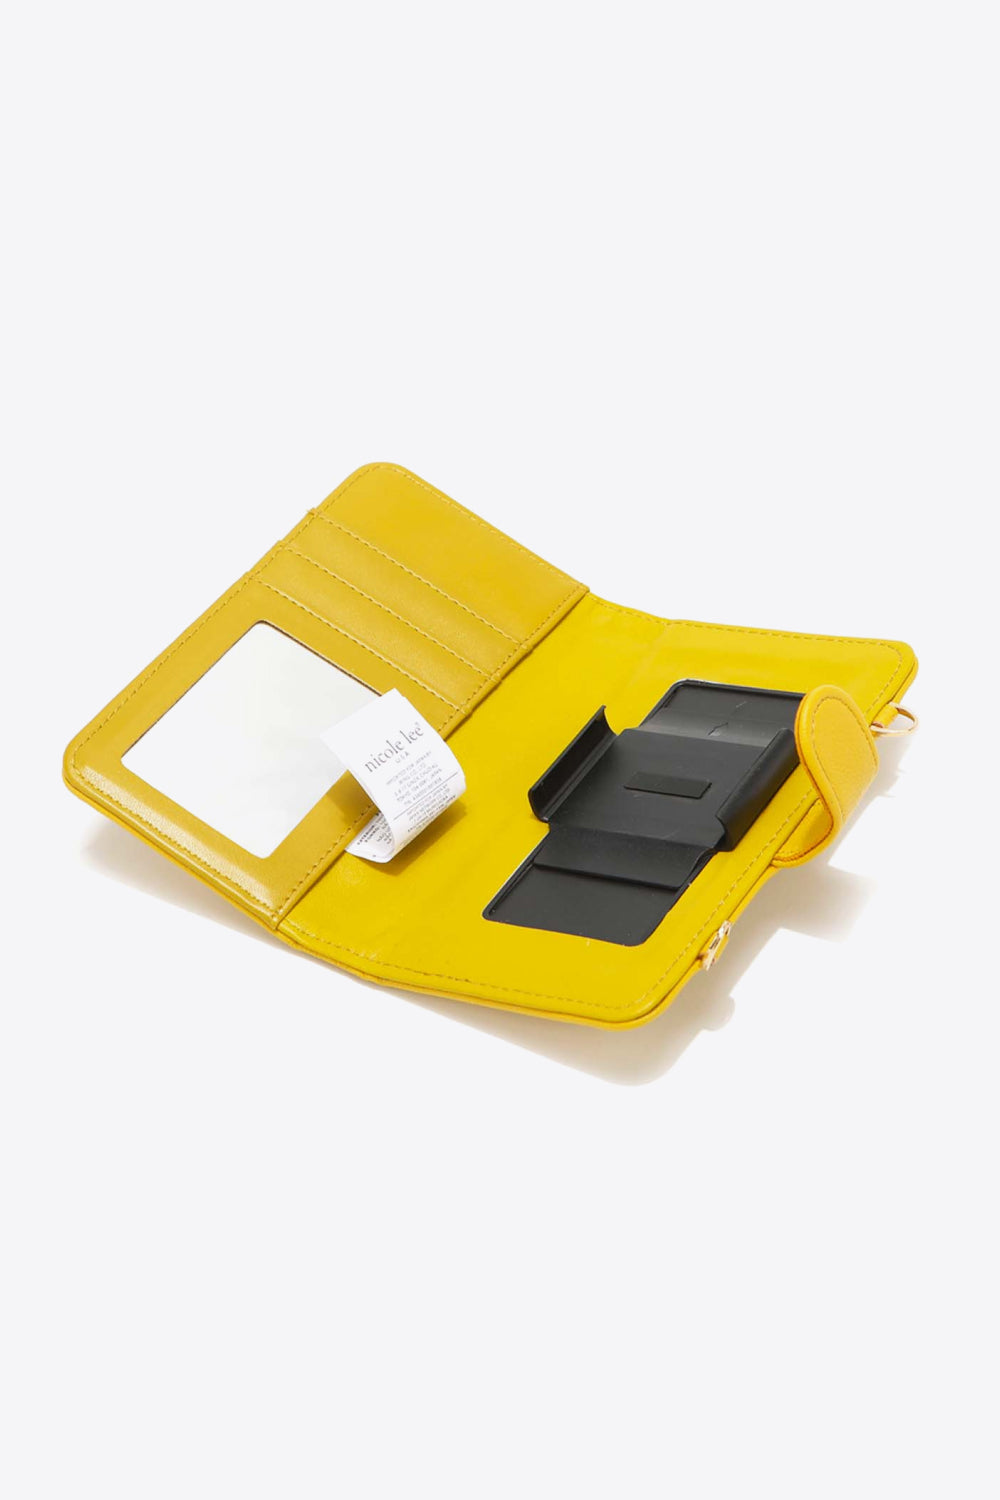 2 Piece Cosmetic Pouch Envelope Crossbody, Travel Accessories Bag Set –  Nicole Lee Online